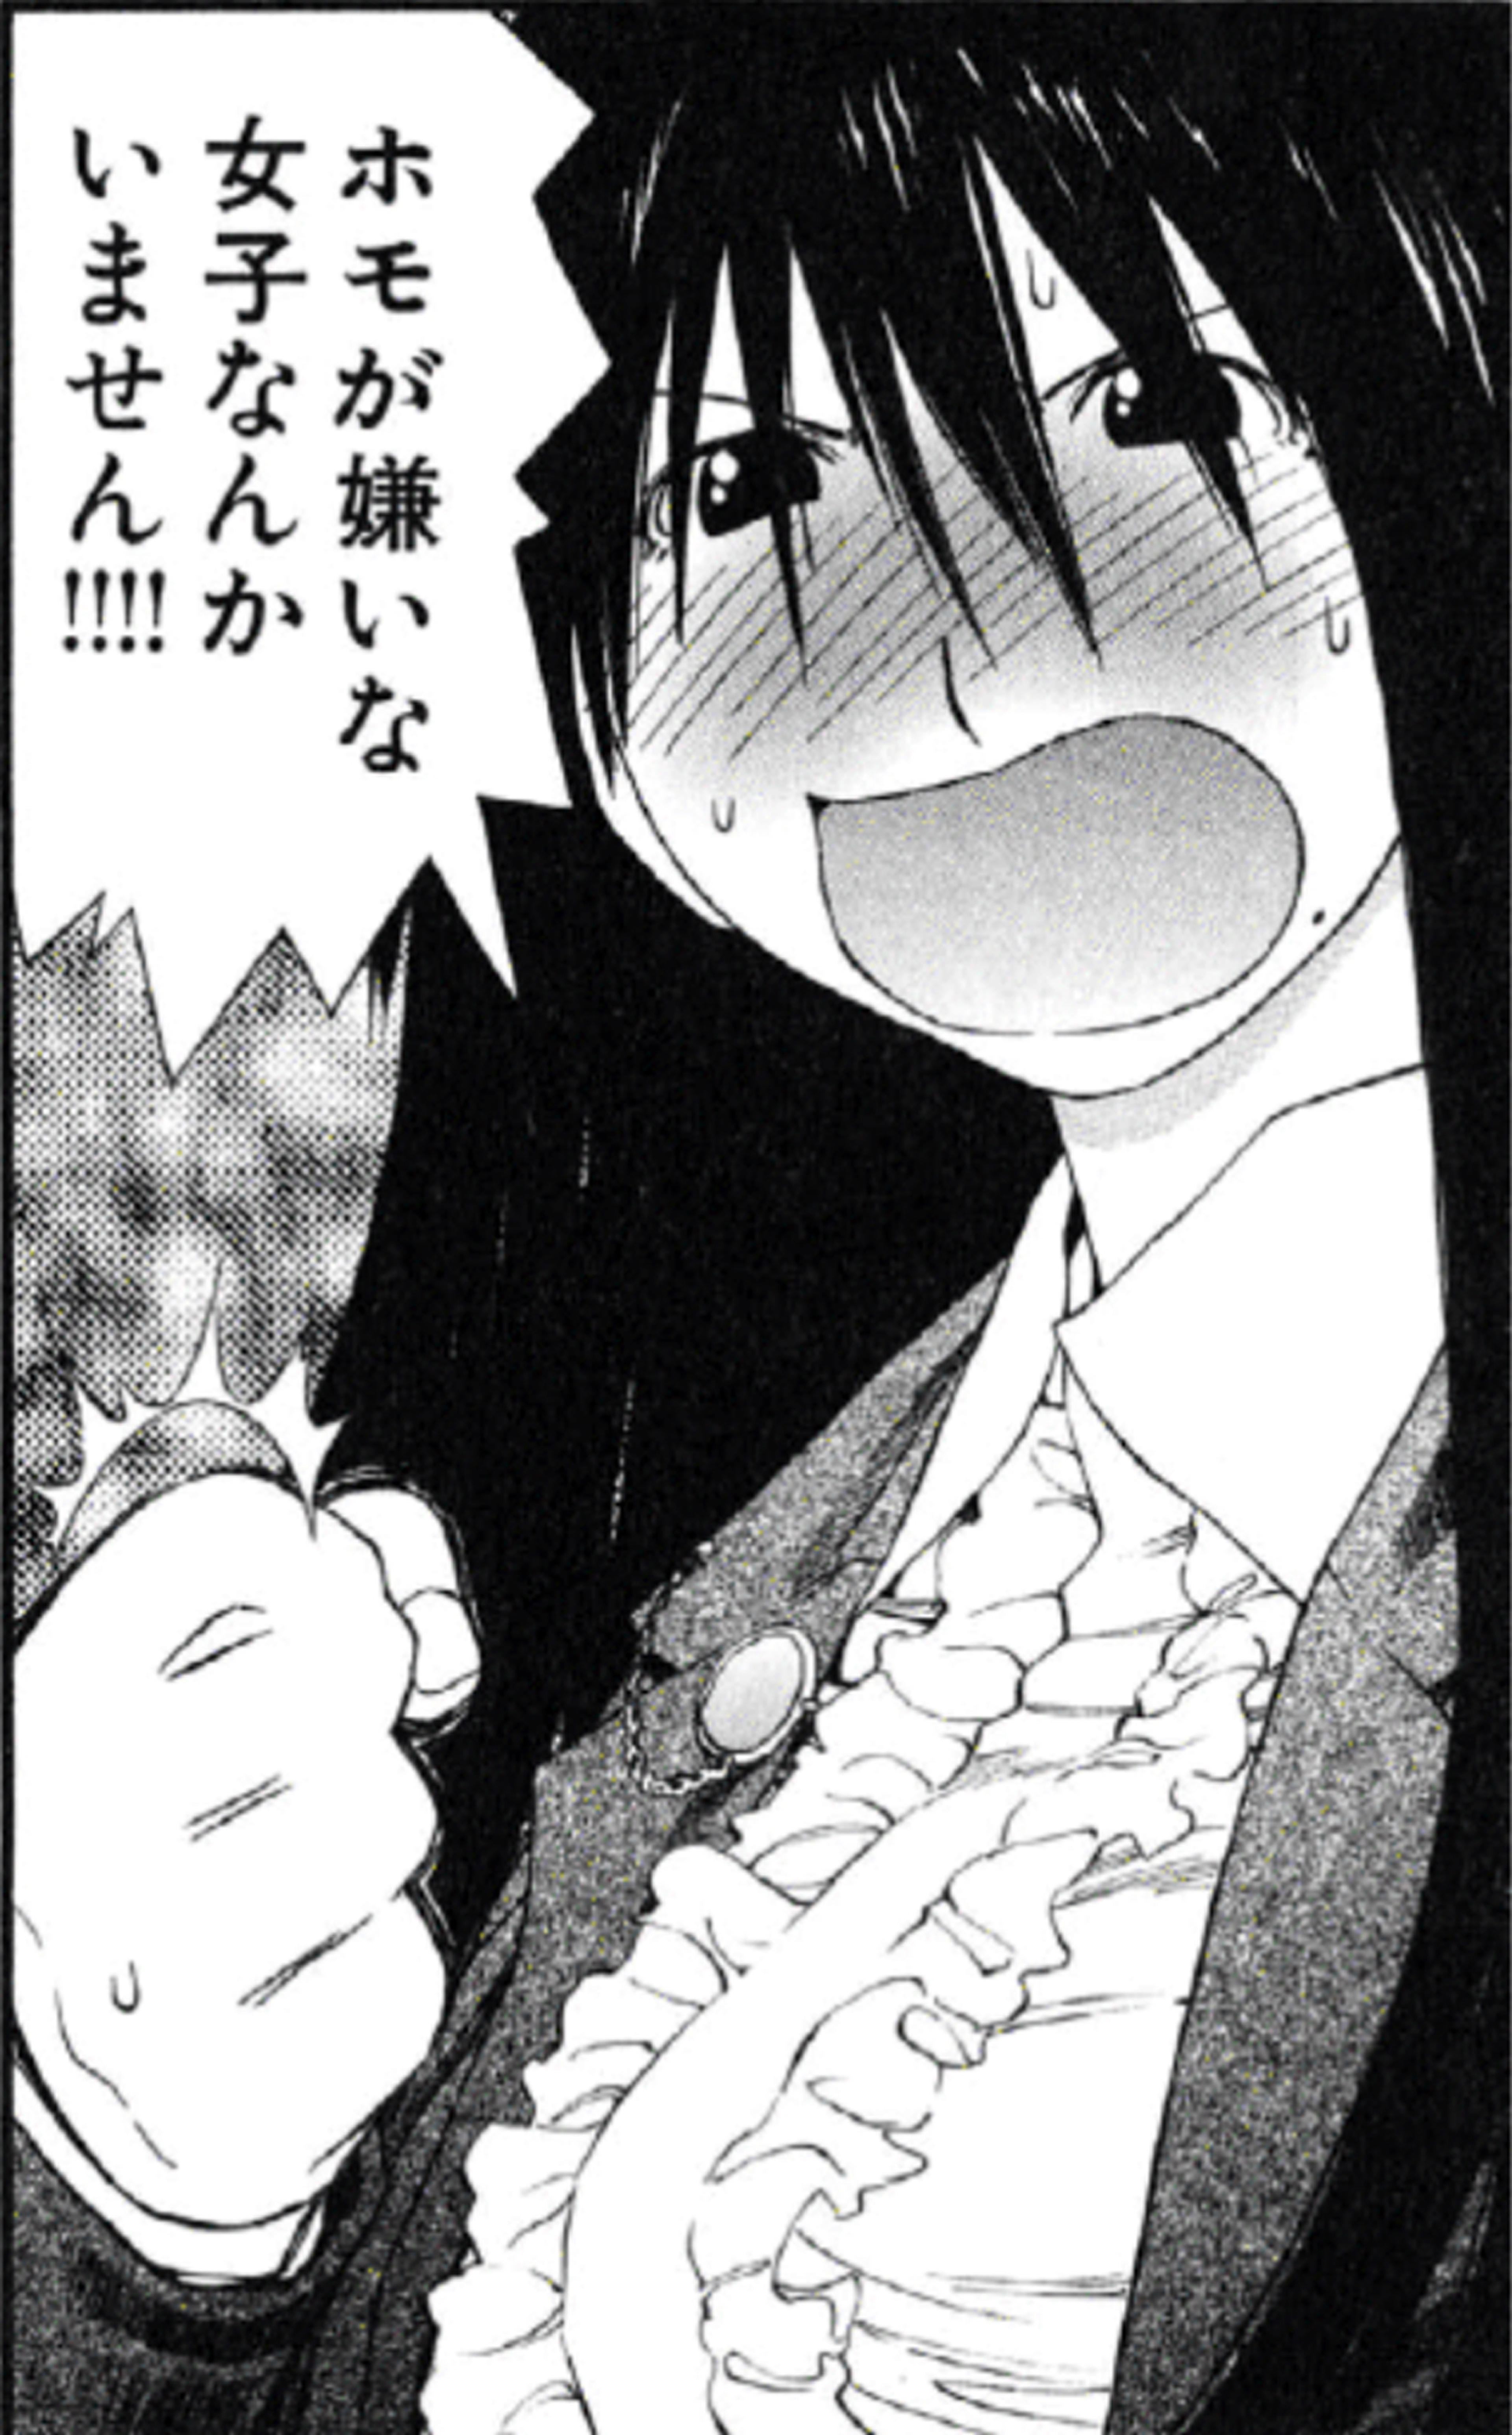 Ōno in the manga Genshiken 